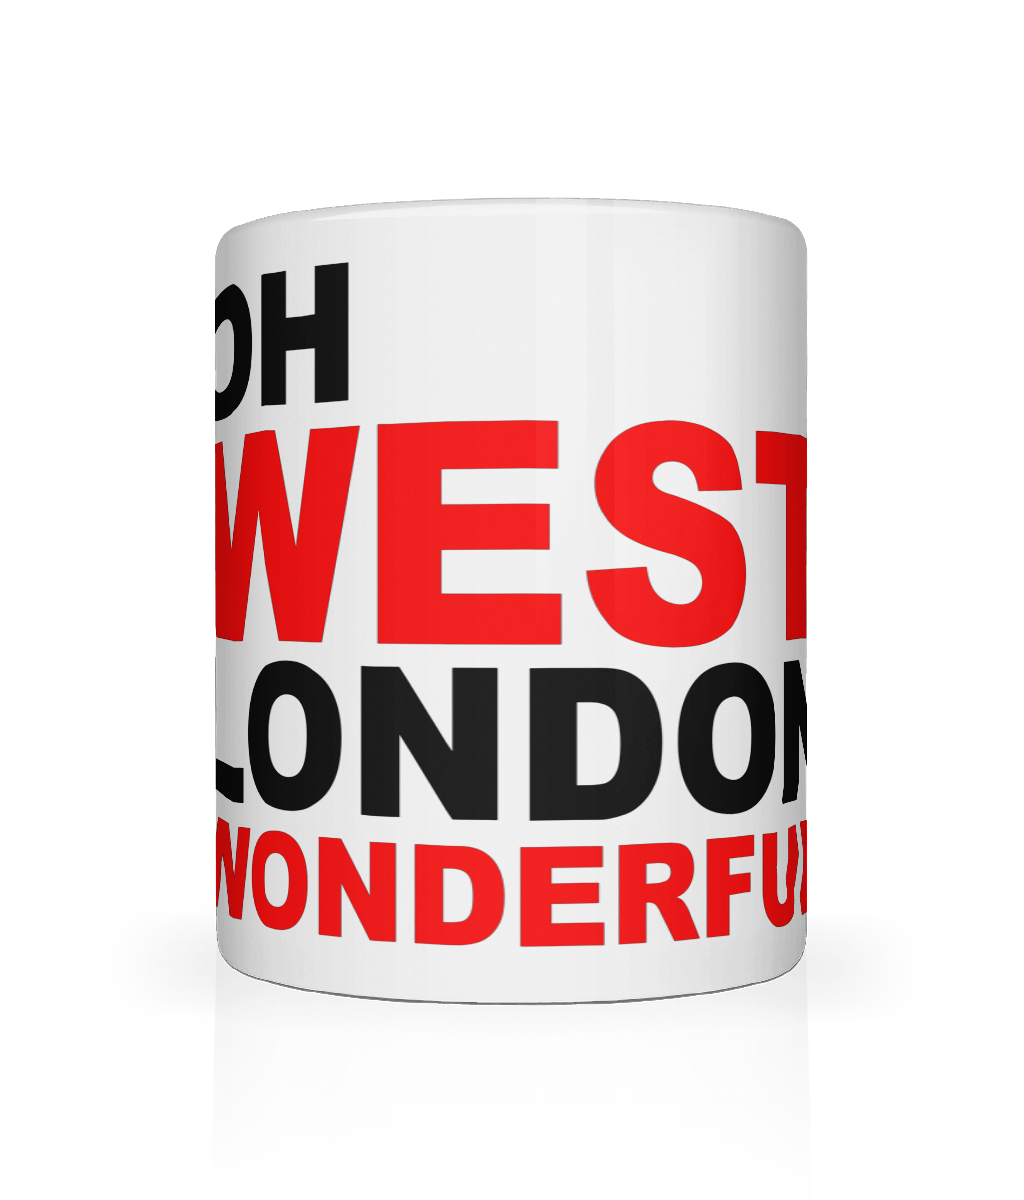 Oh West London is Wonderful Mug